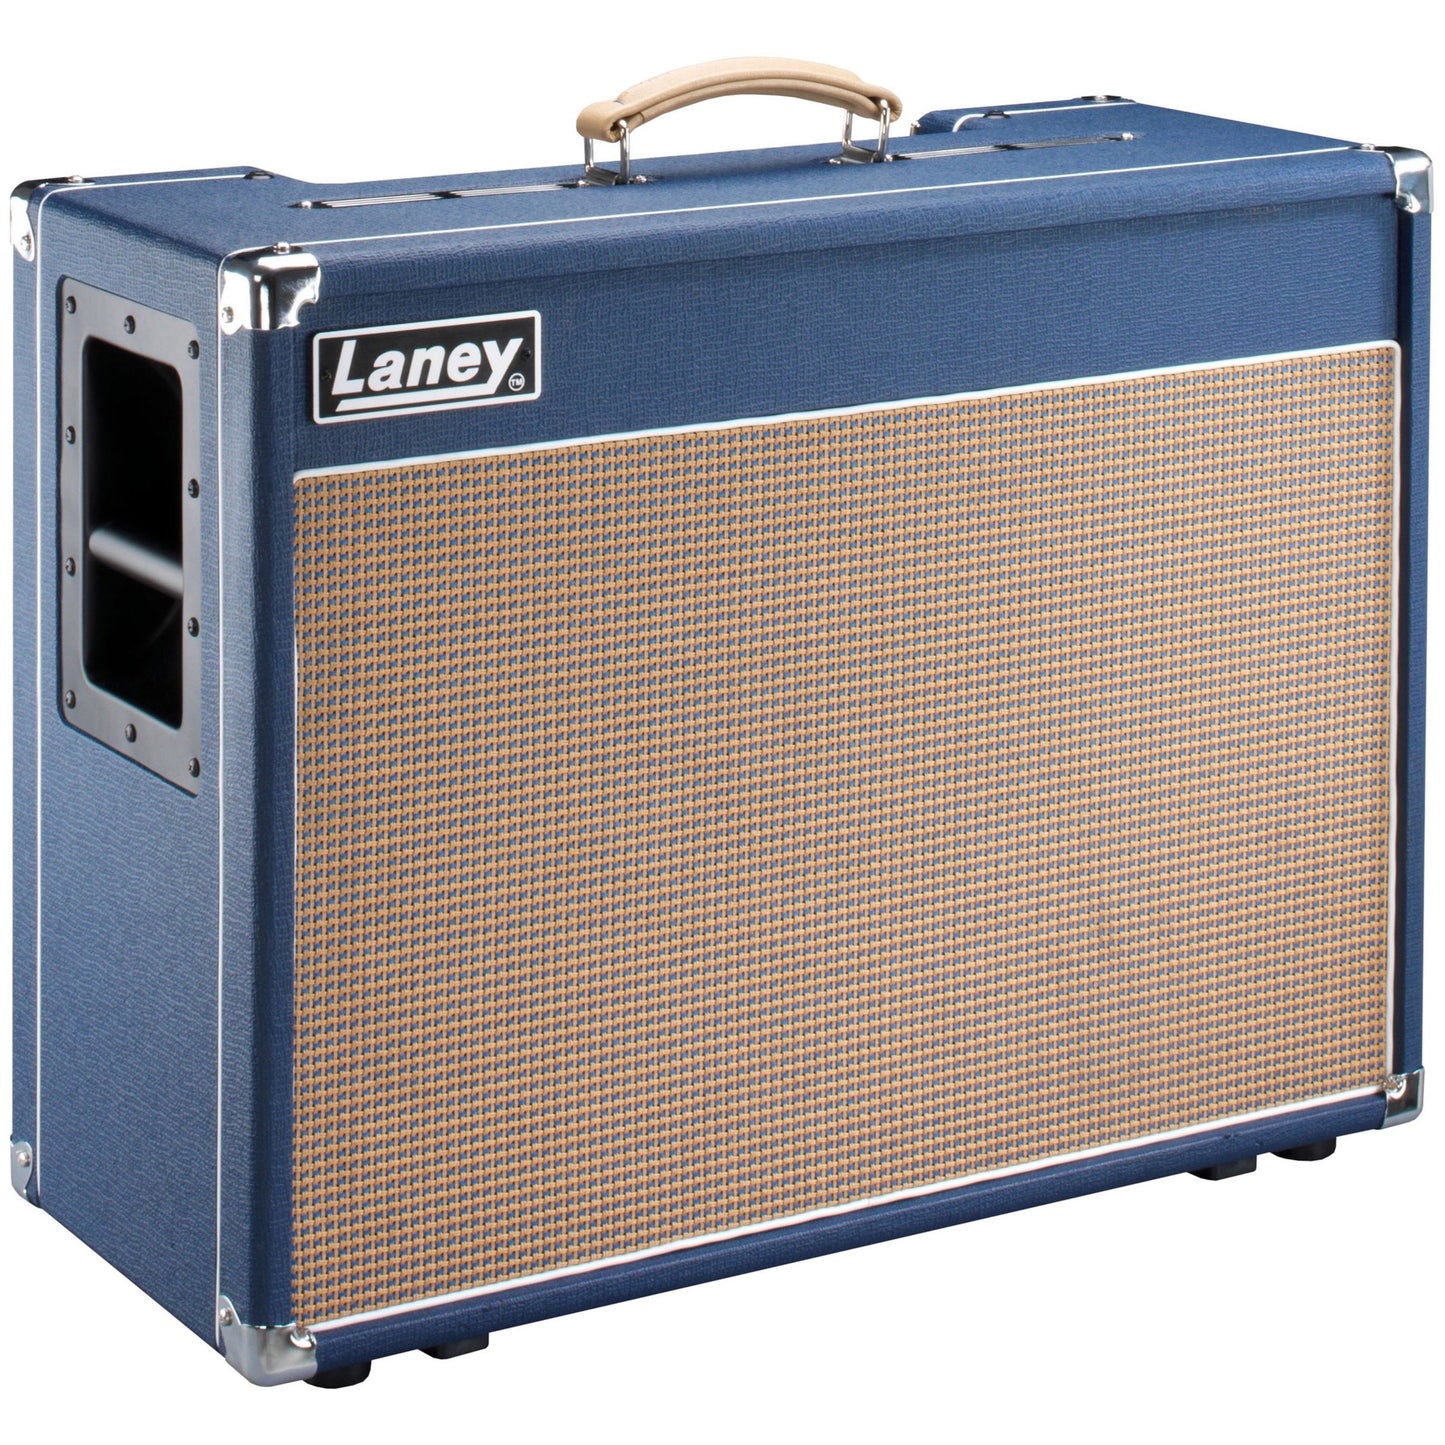 Laney L20T212 Guitar Combo Amplifier (20 Watts, 2x12 Inch)